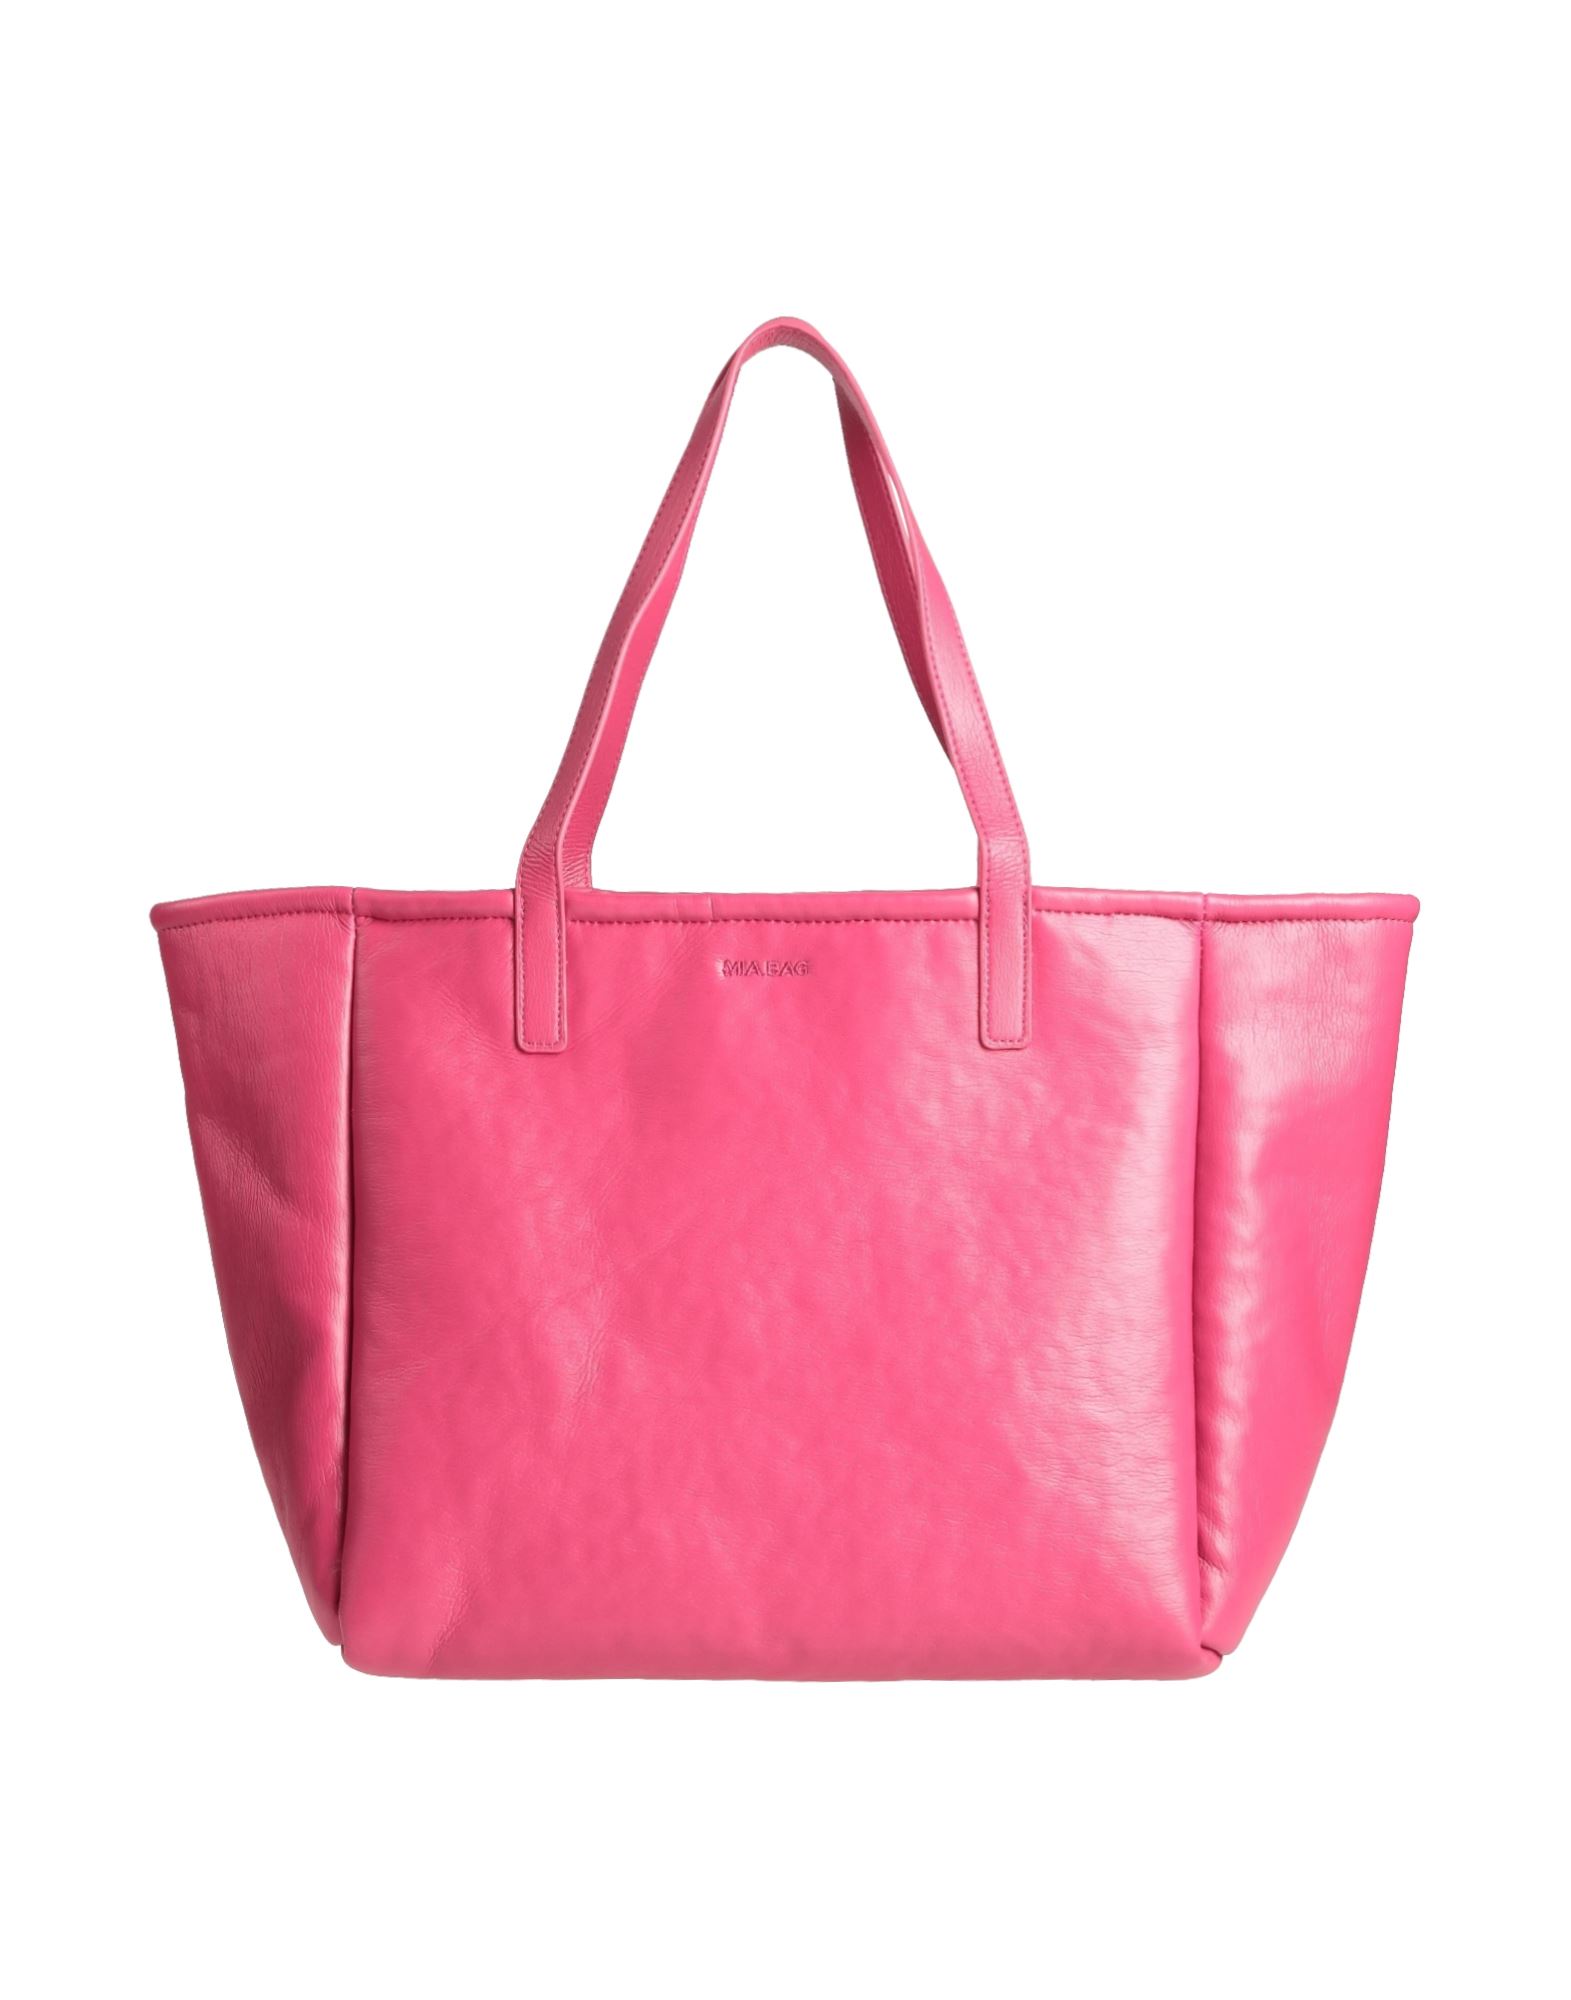 MIA Shoulder Bag Bags & Handbags for Women for sale